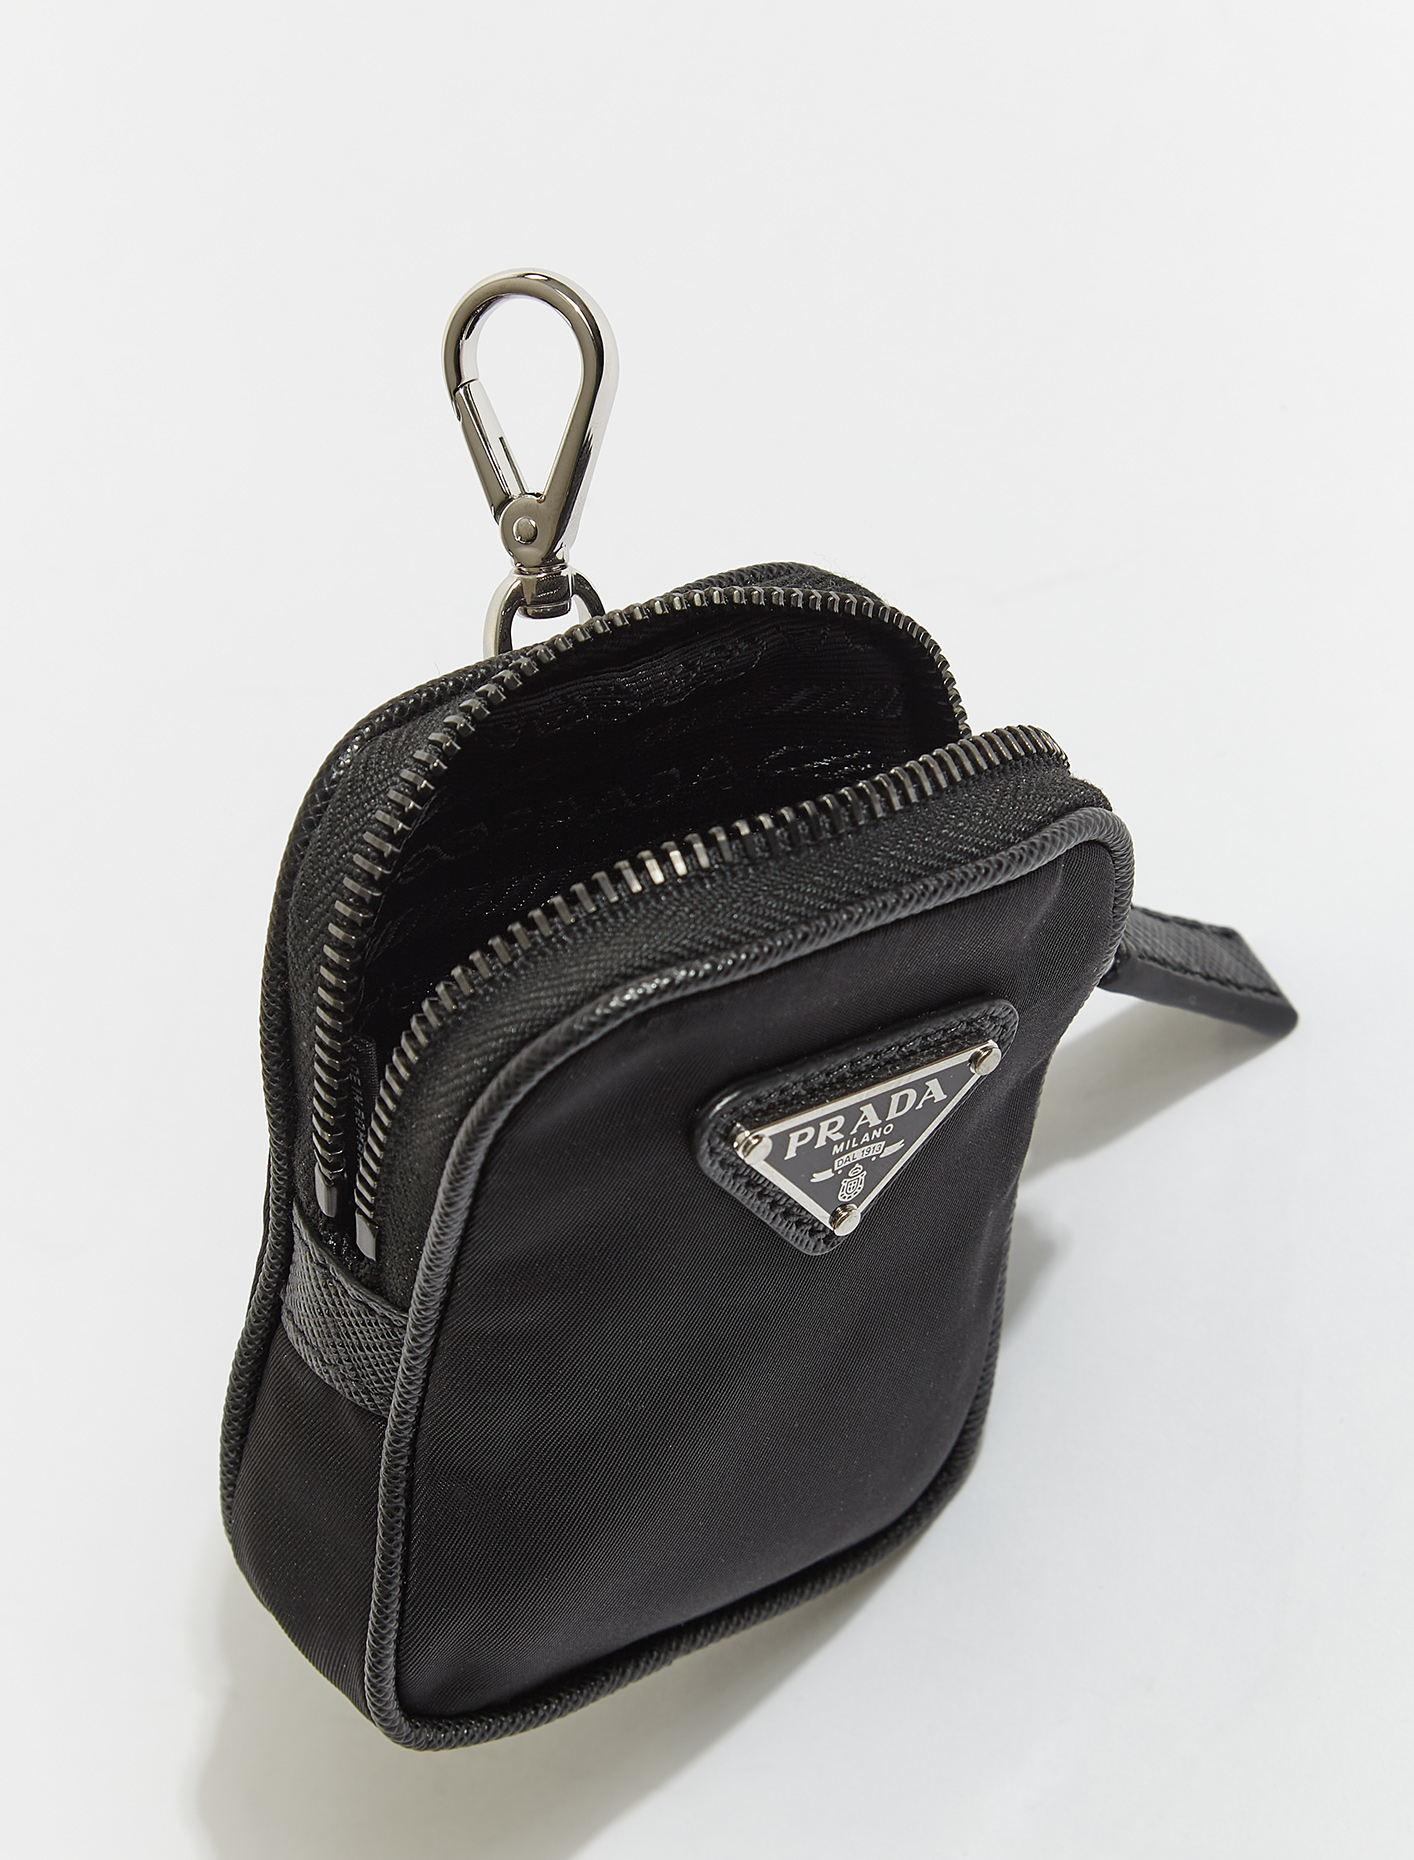 Prada Re-Nylon and Saffiano Leather Shoulder Bag in Black